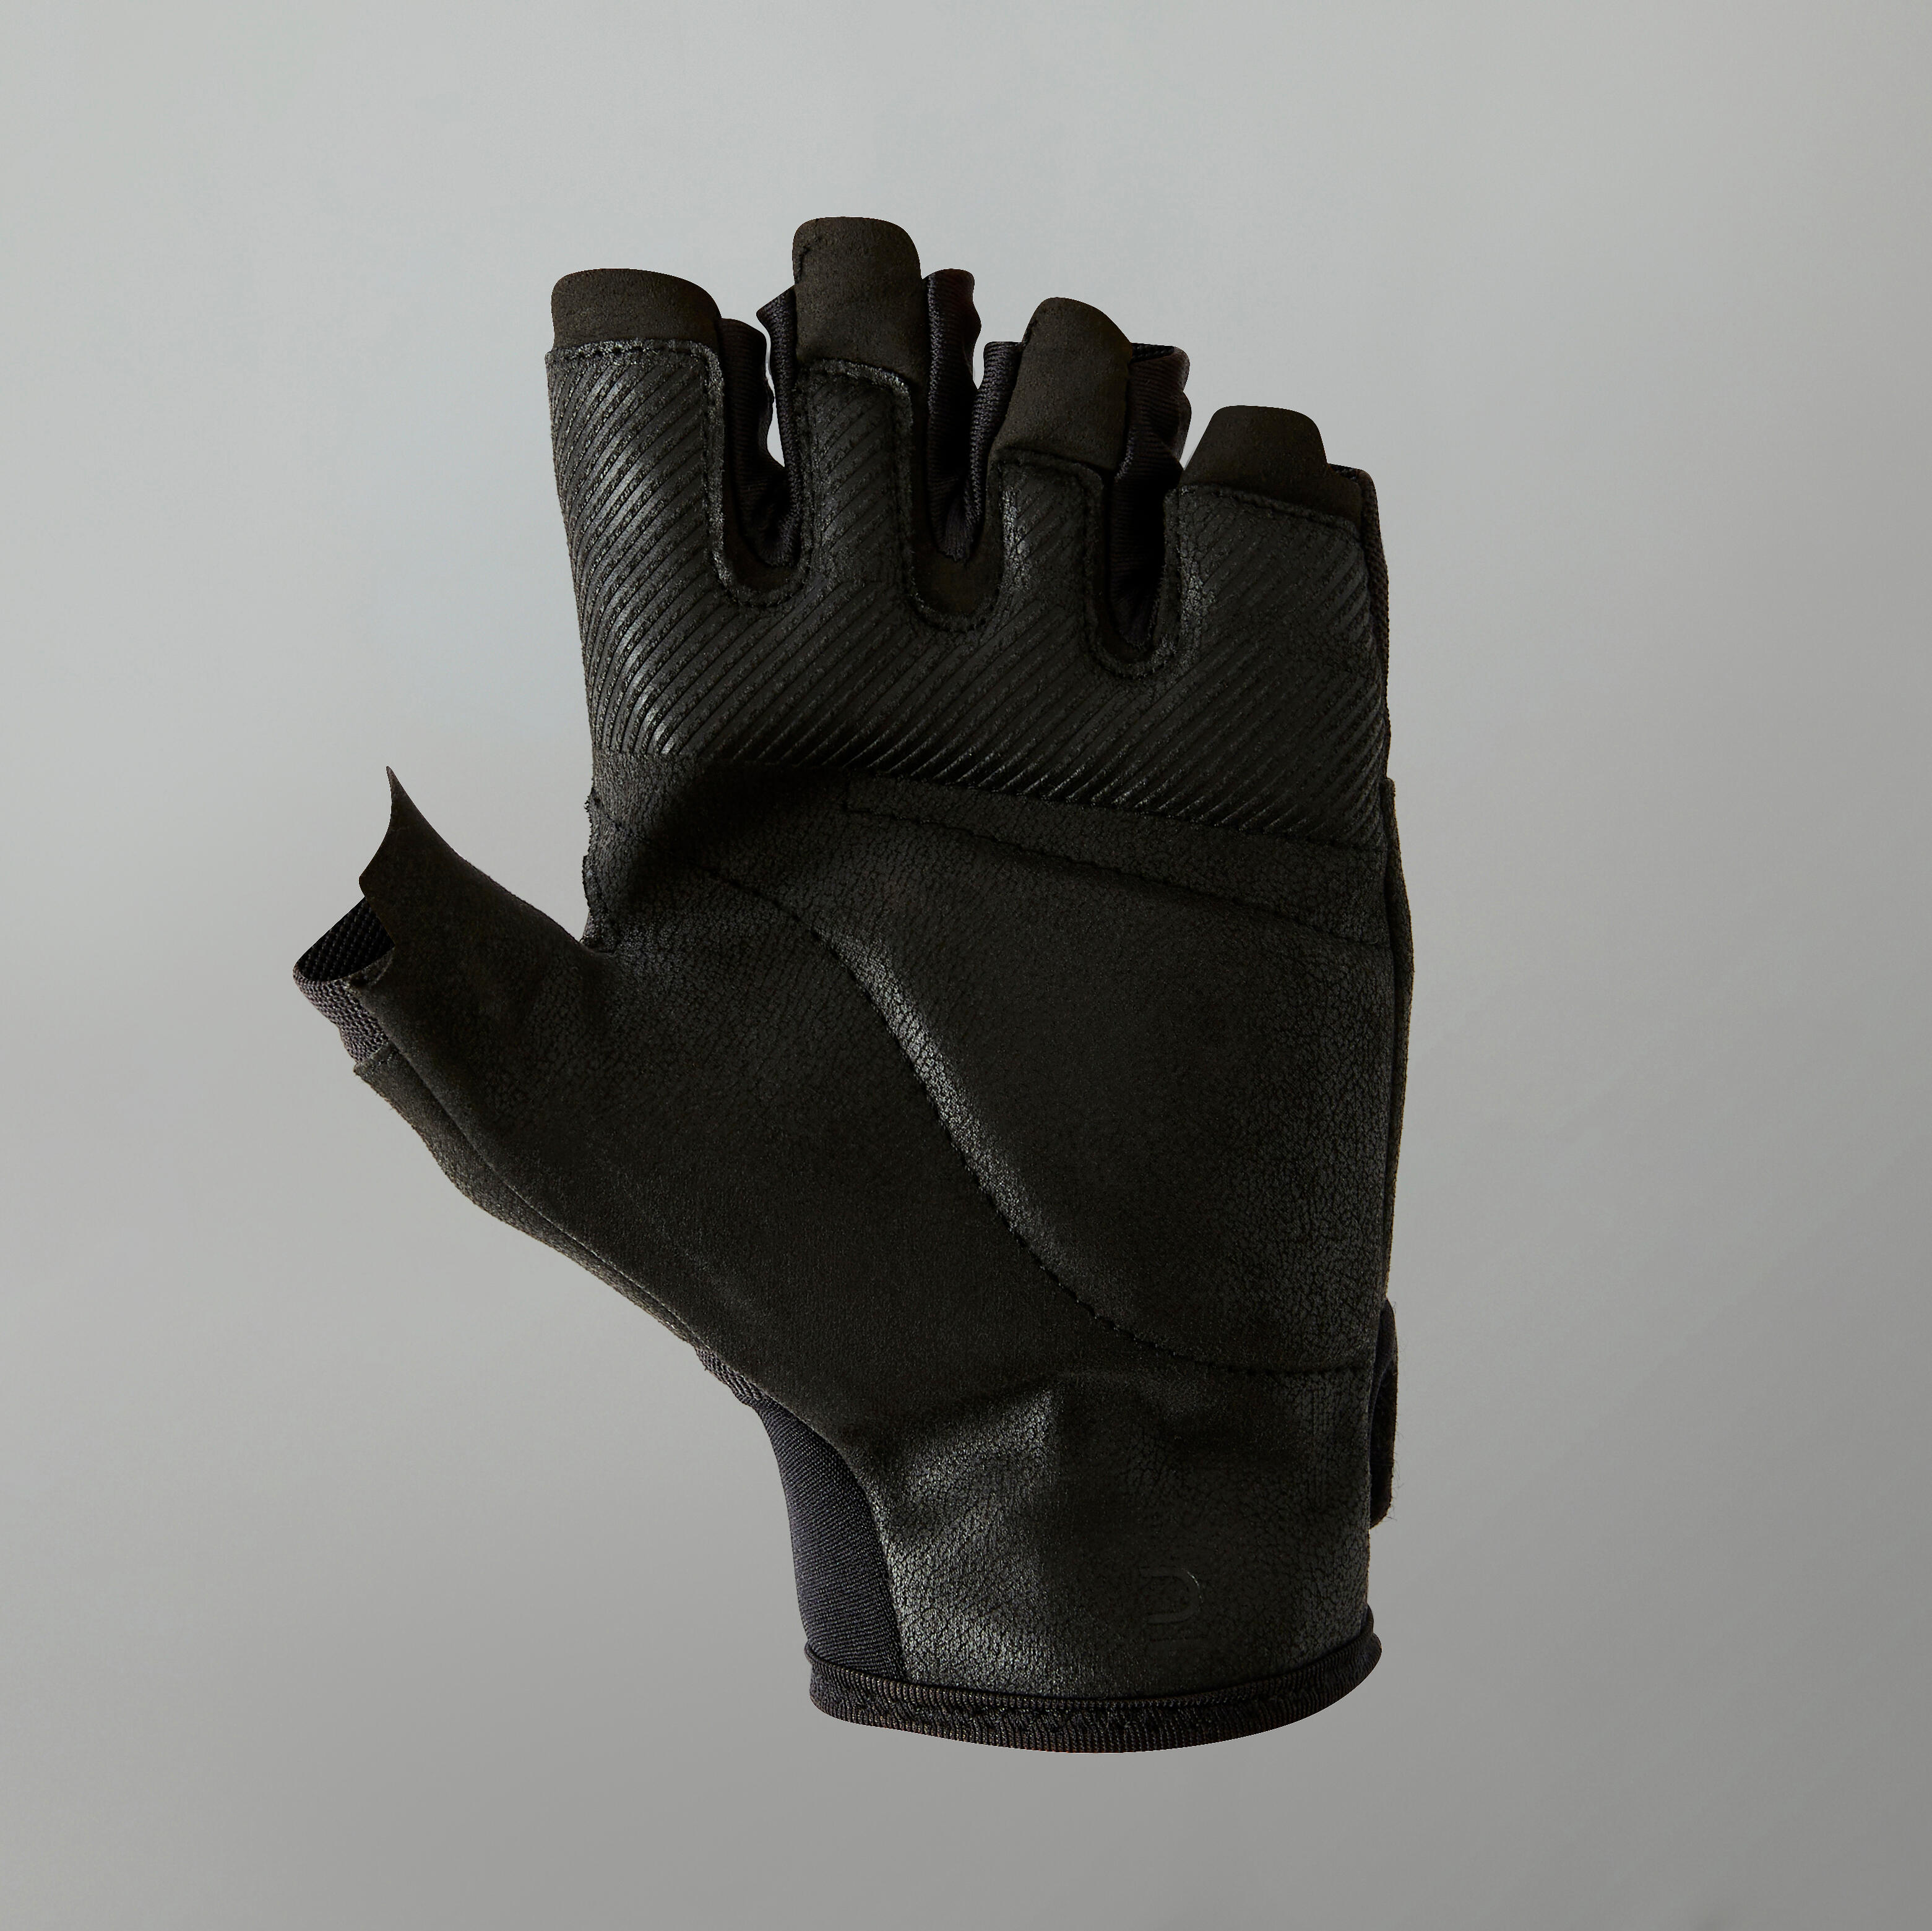 Weight Training Gloves - 500 Black - Black - Domyos - Decathlon